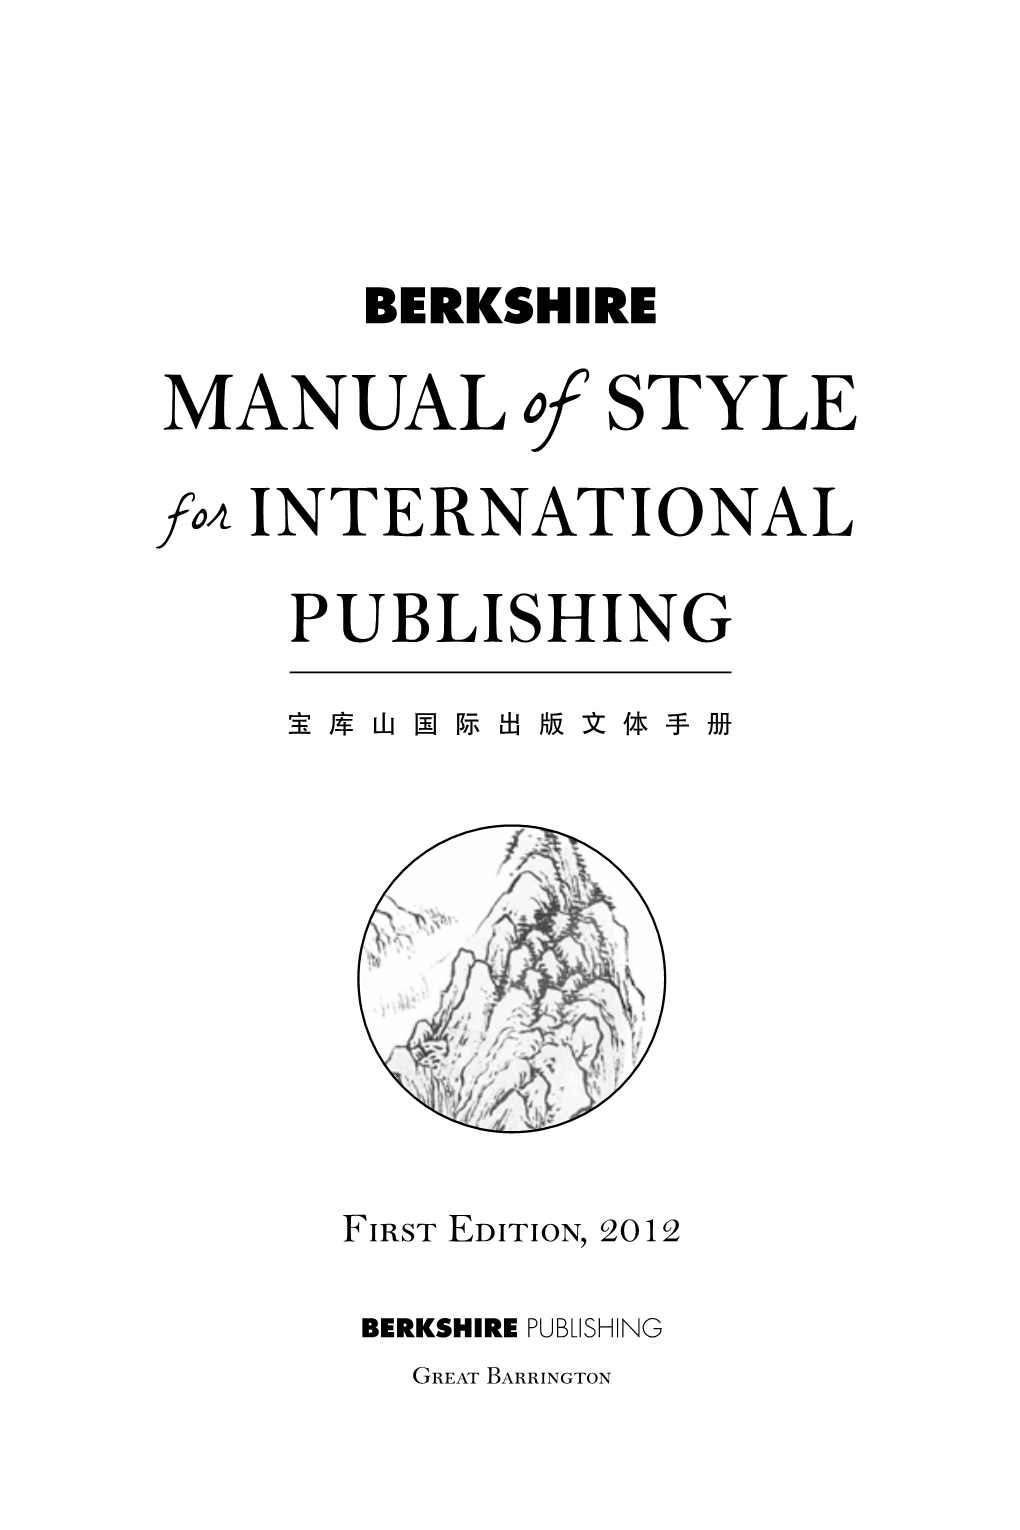 Manual of Style for International Publishing